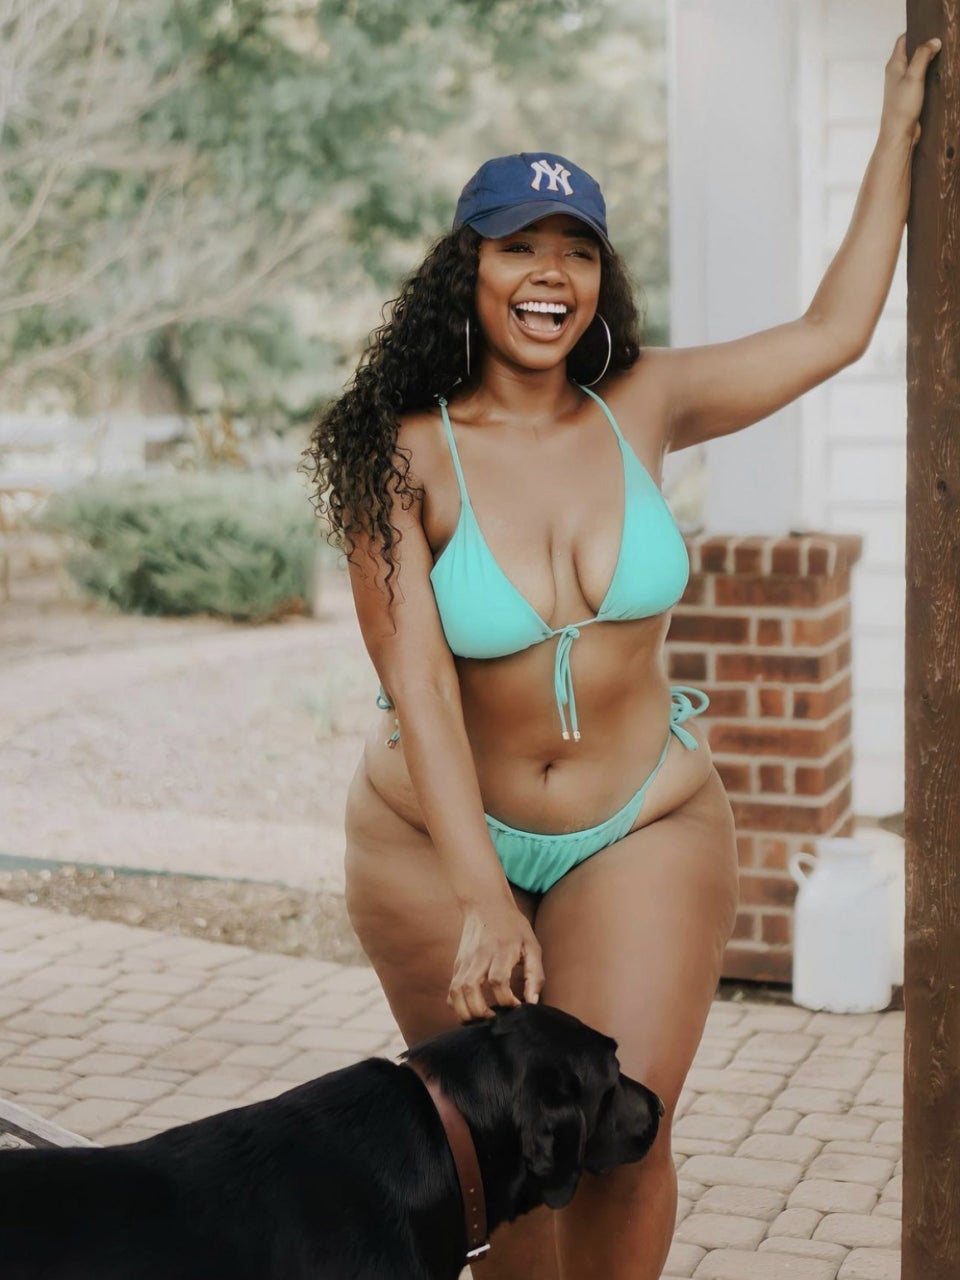 Plus-Size Model Sydney Bell Wants Women To Know That Every Body Is A “Bikini Body”